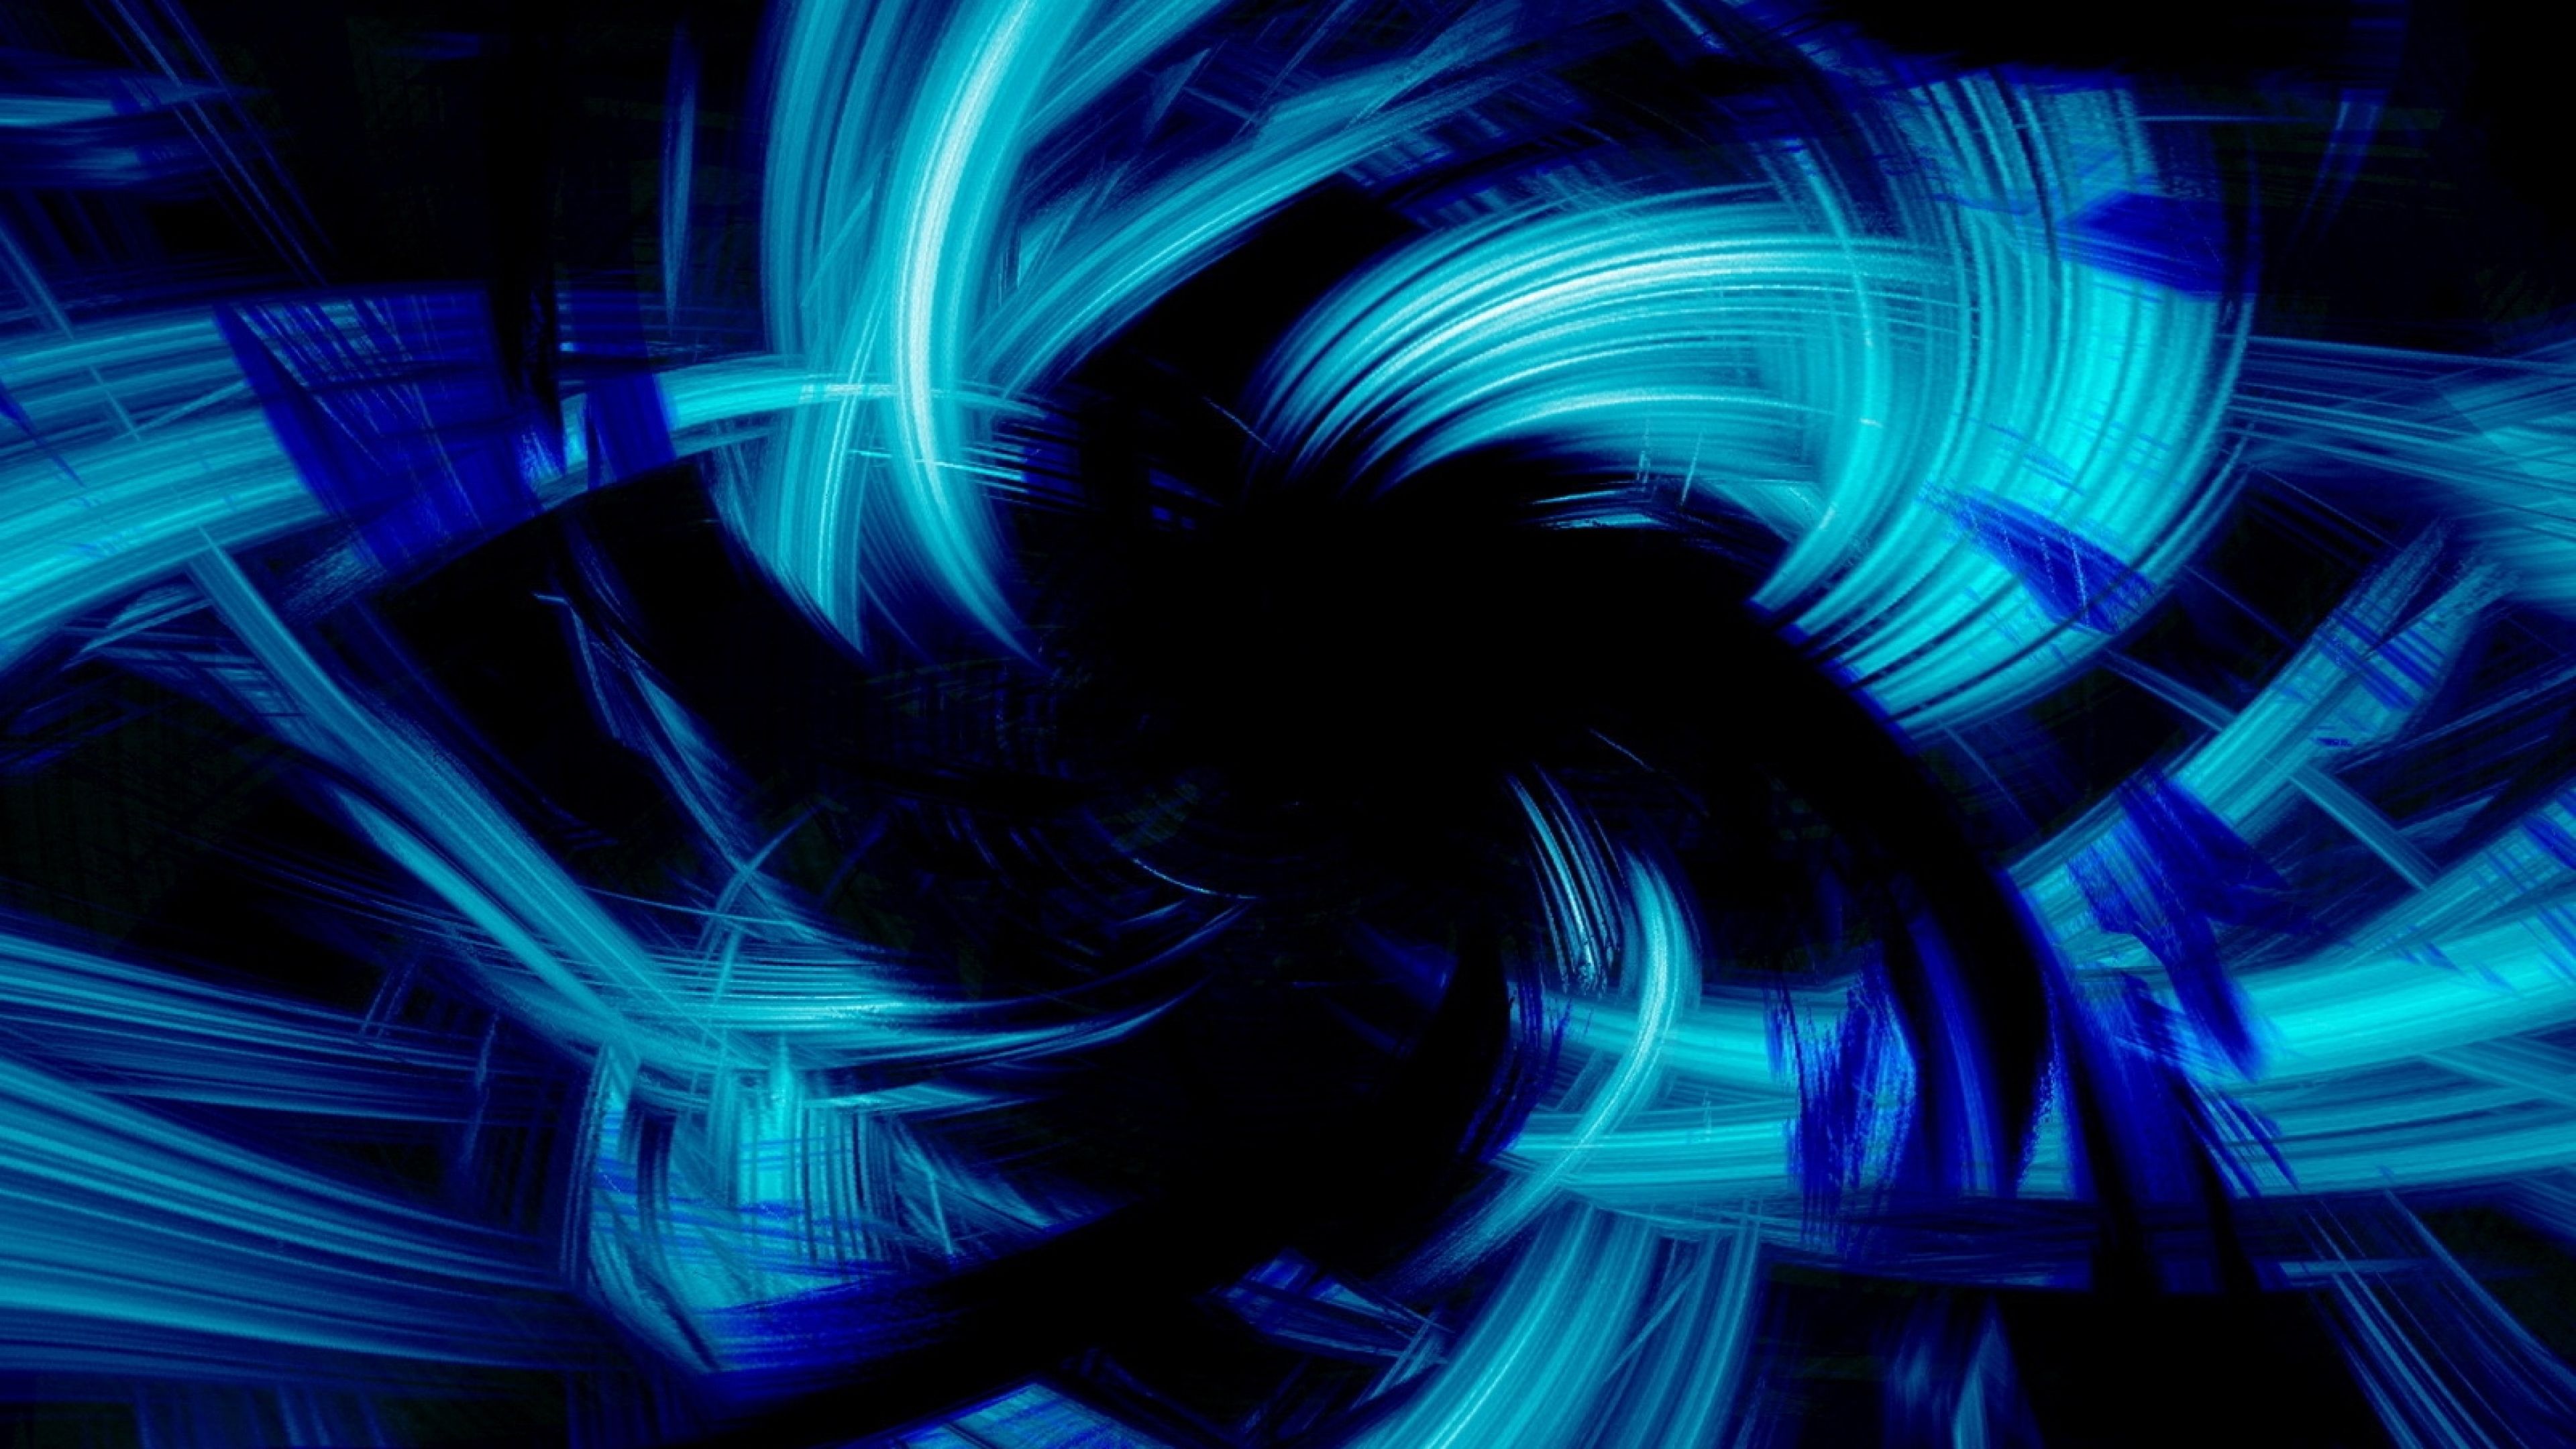 4k resolution neon wallpaper hd: Blue Cool Wallpaper Neon Cool Background